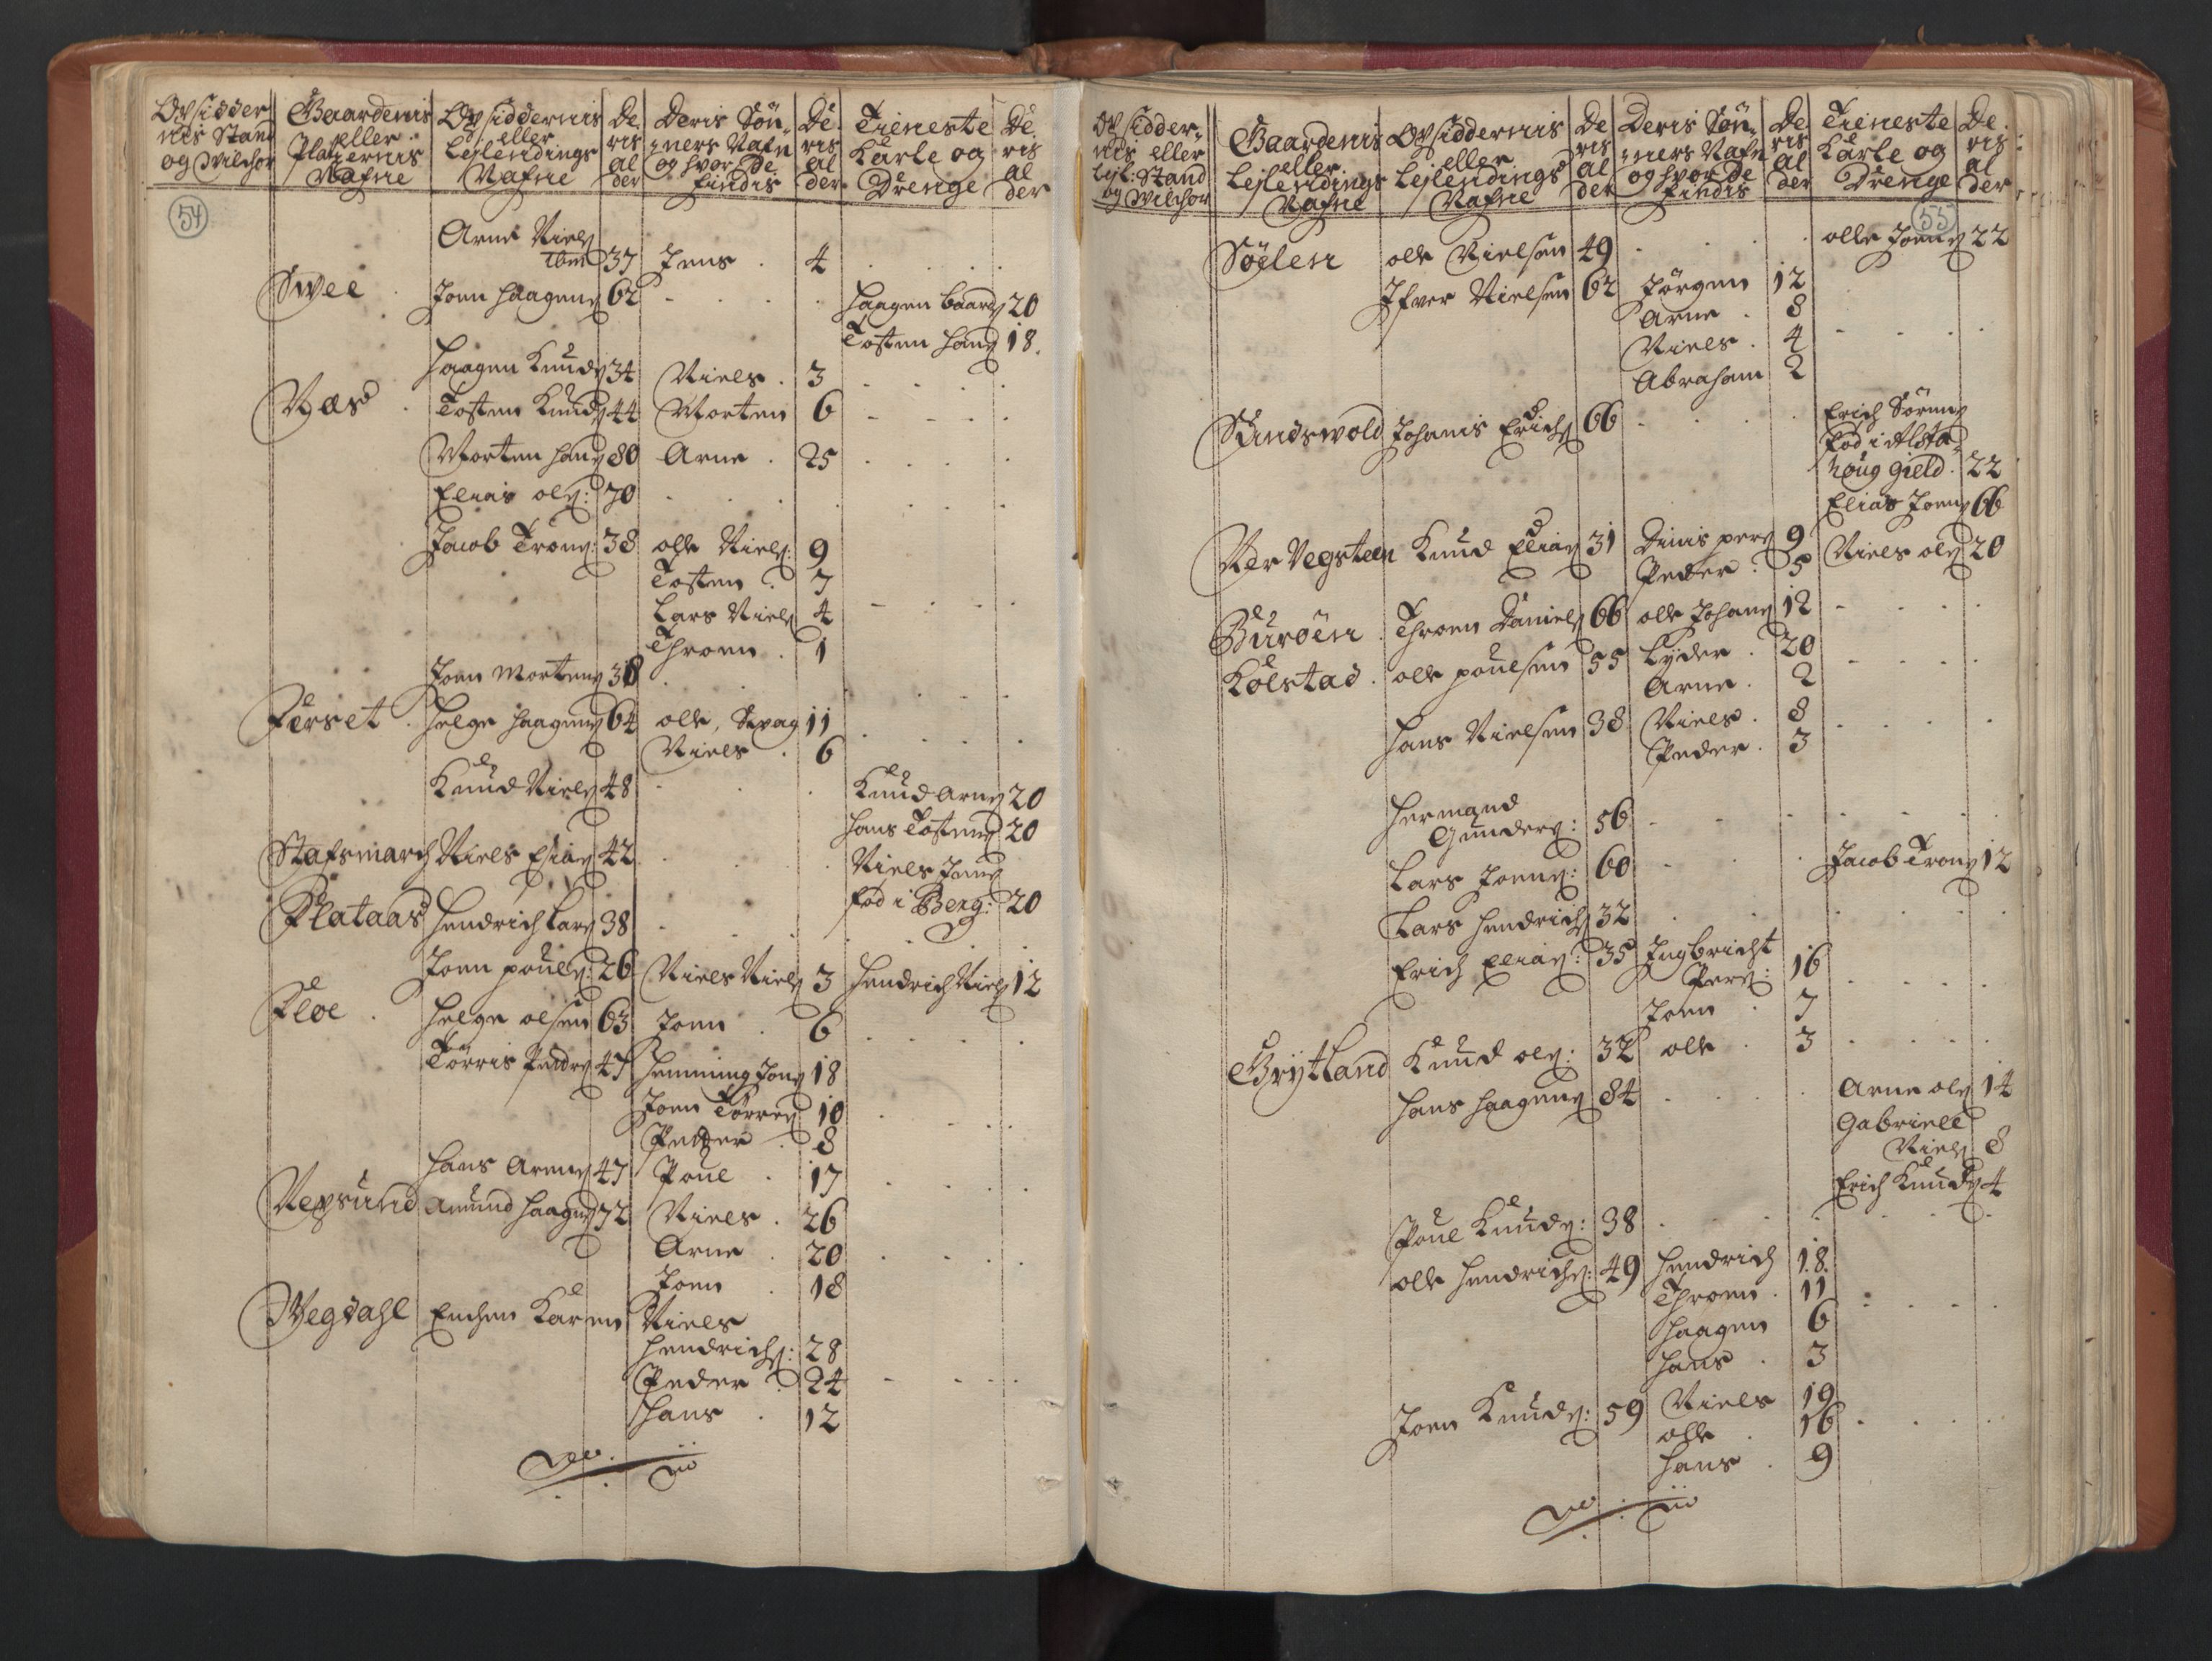 RA, Census (manntall) 1701, no. 16: Helgeland fogderi, 1701, p. 54-55